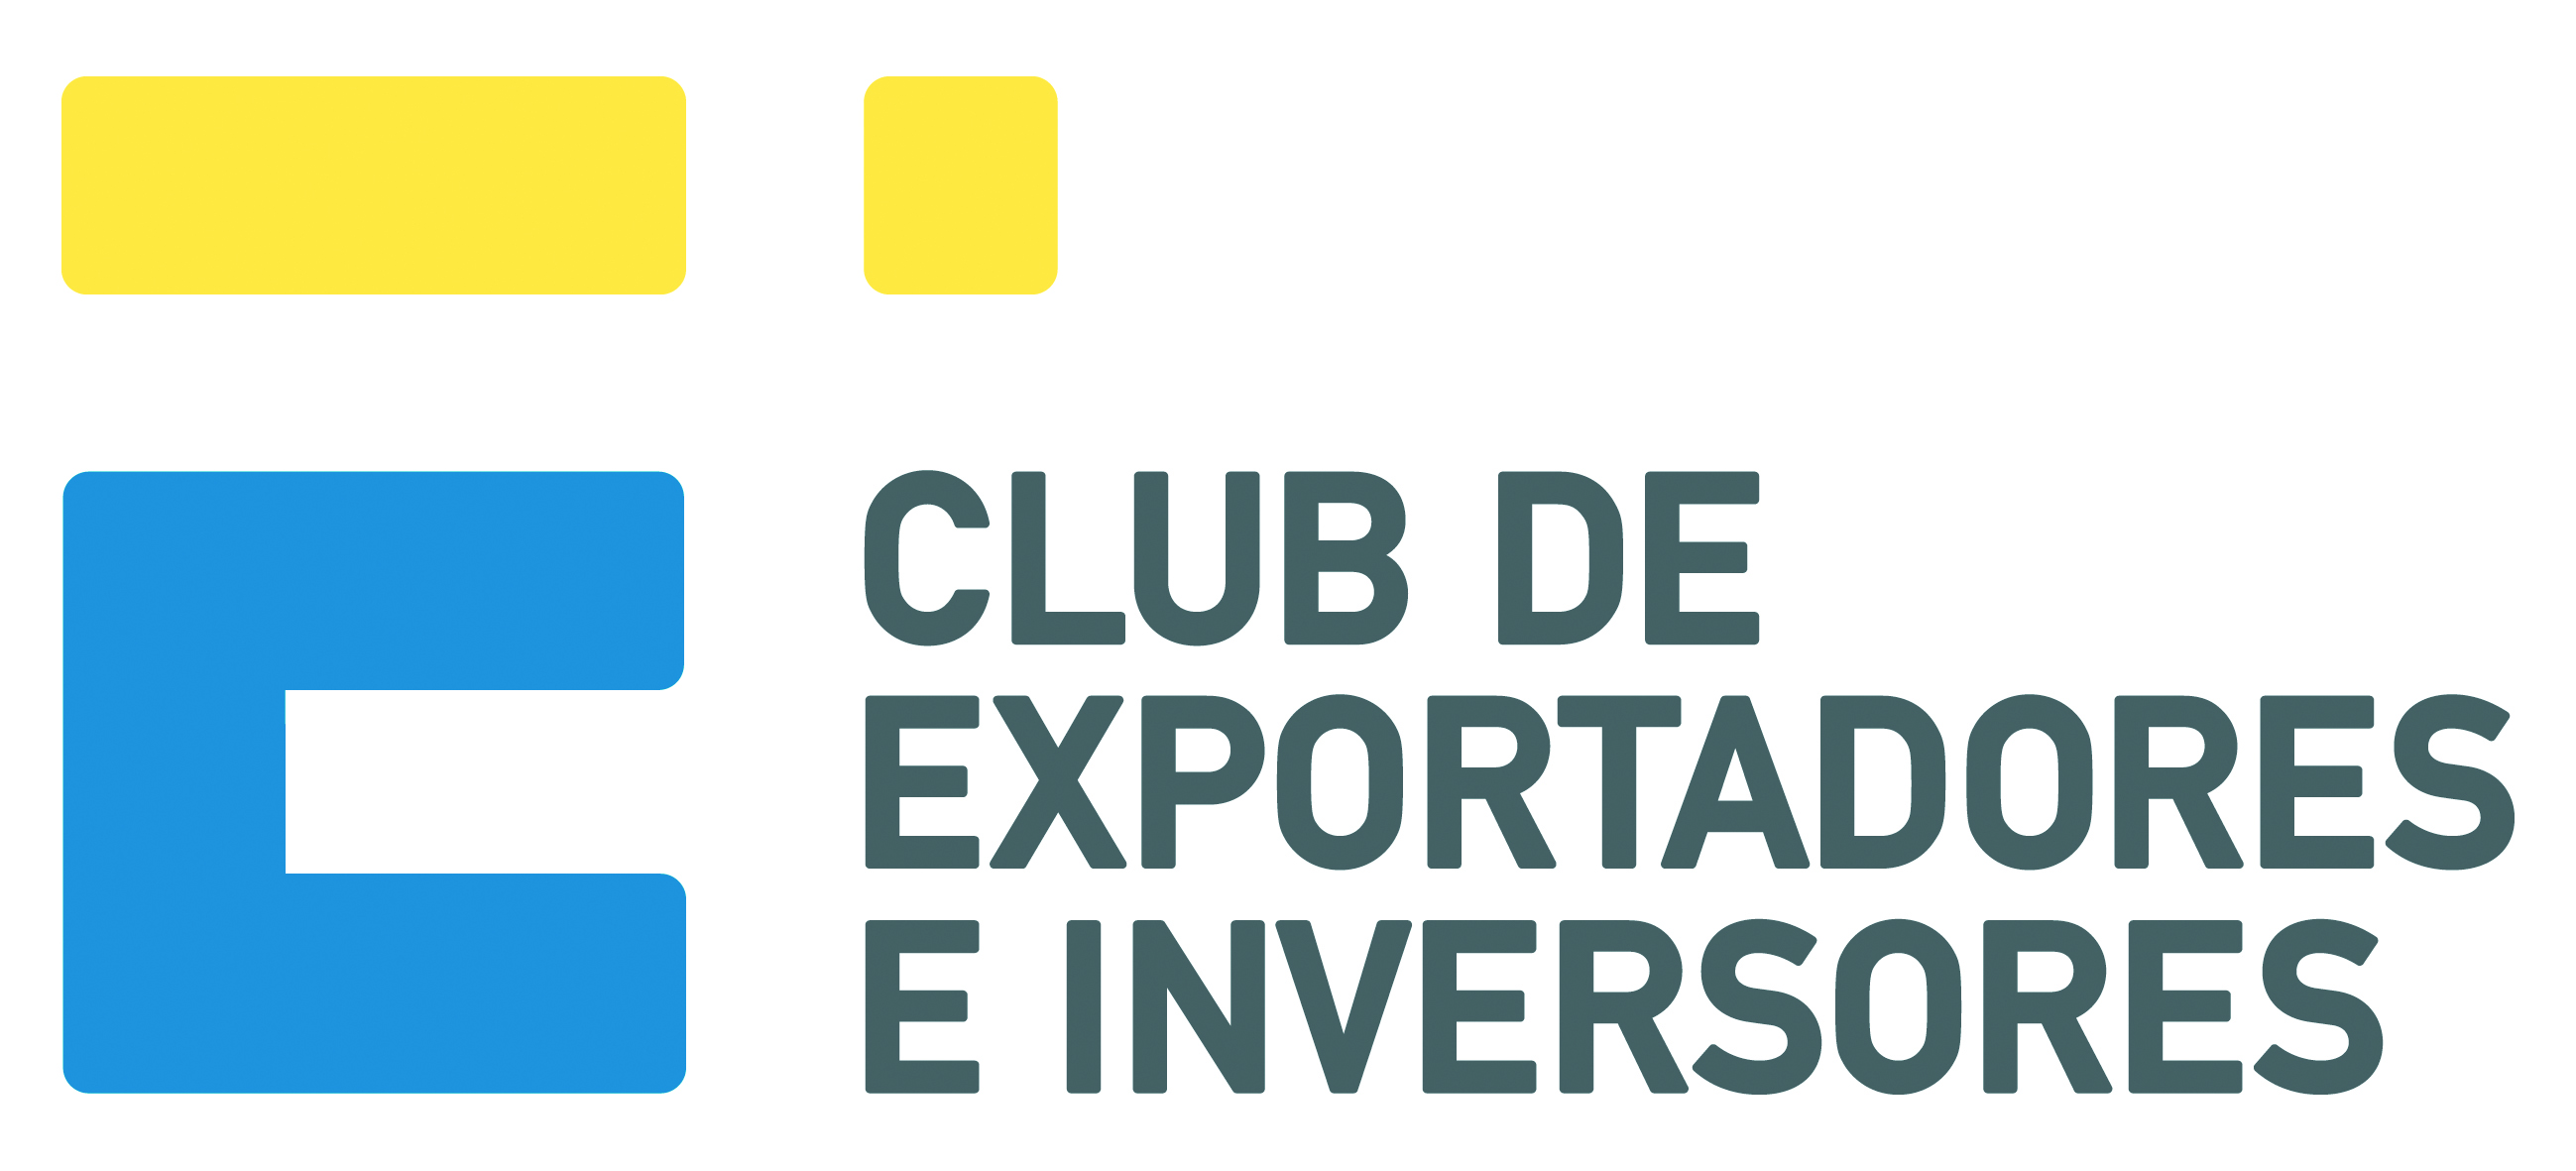 Club de Exportadores e Inversores 